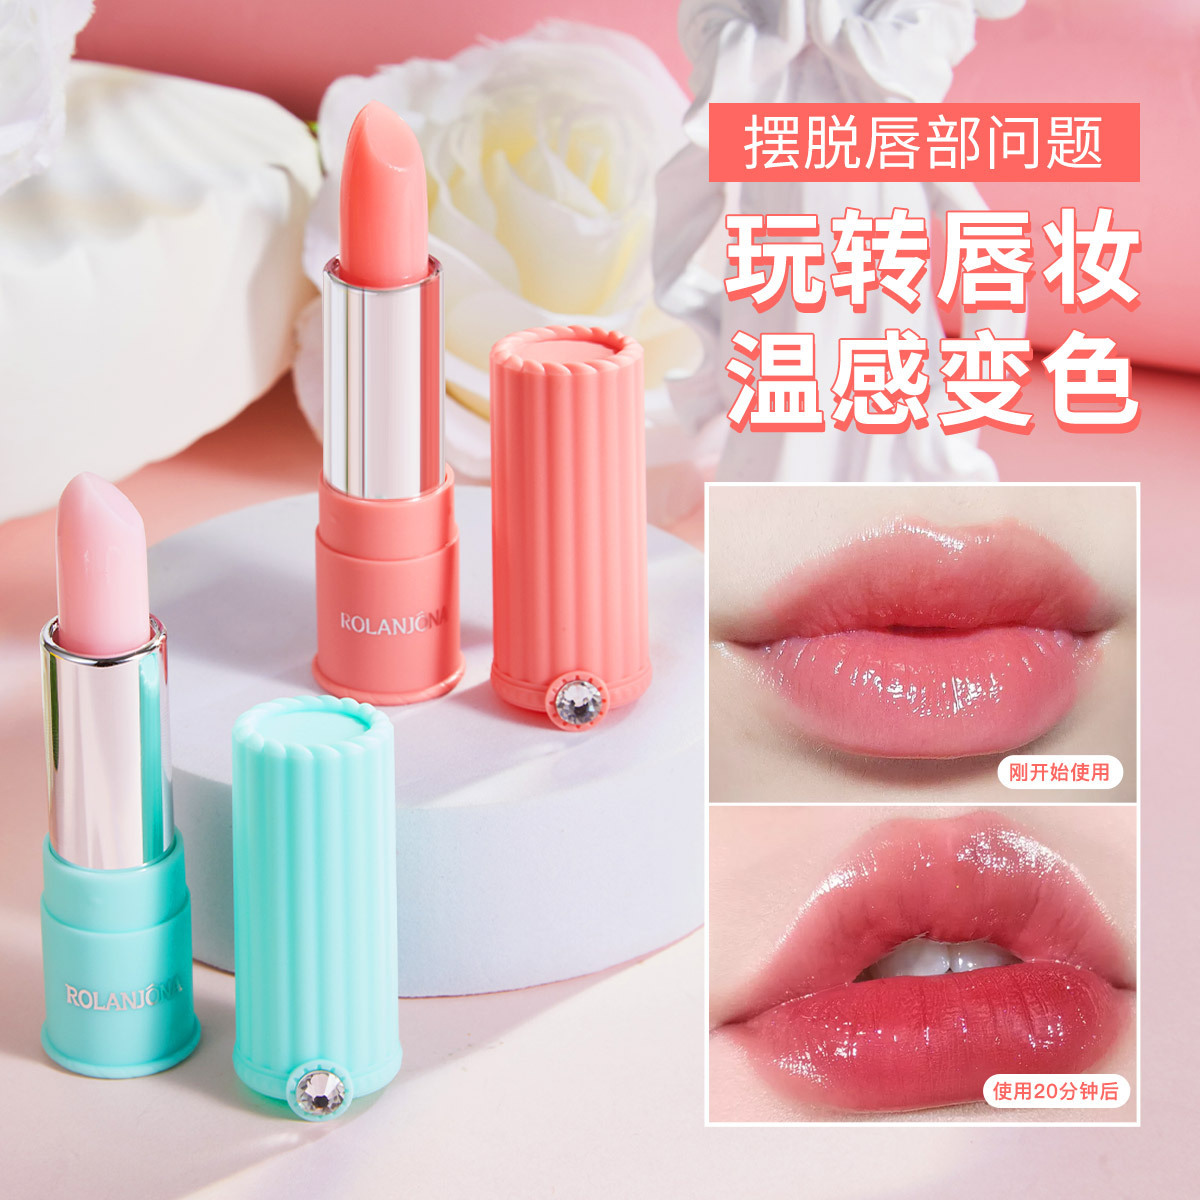 Lu Lan Gina Yuet Yan Repair Lip Balm moist Replenish water Moisture Desalination Discoloration Lipstick